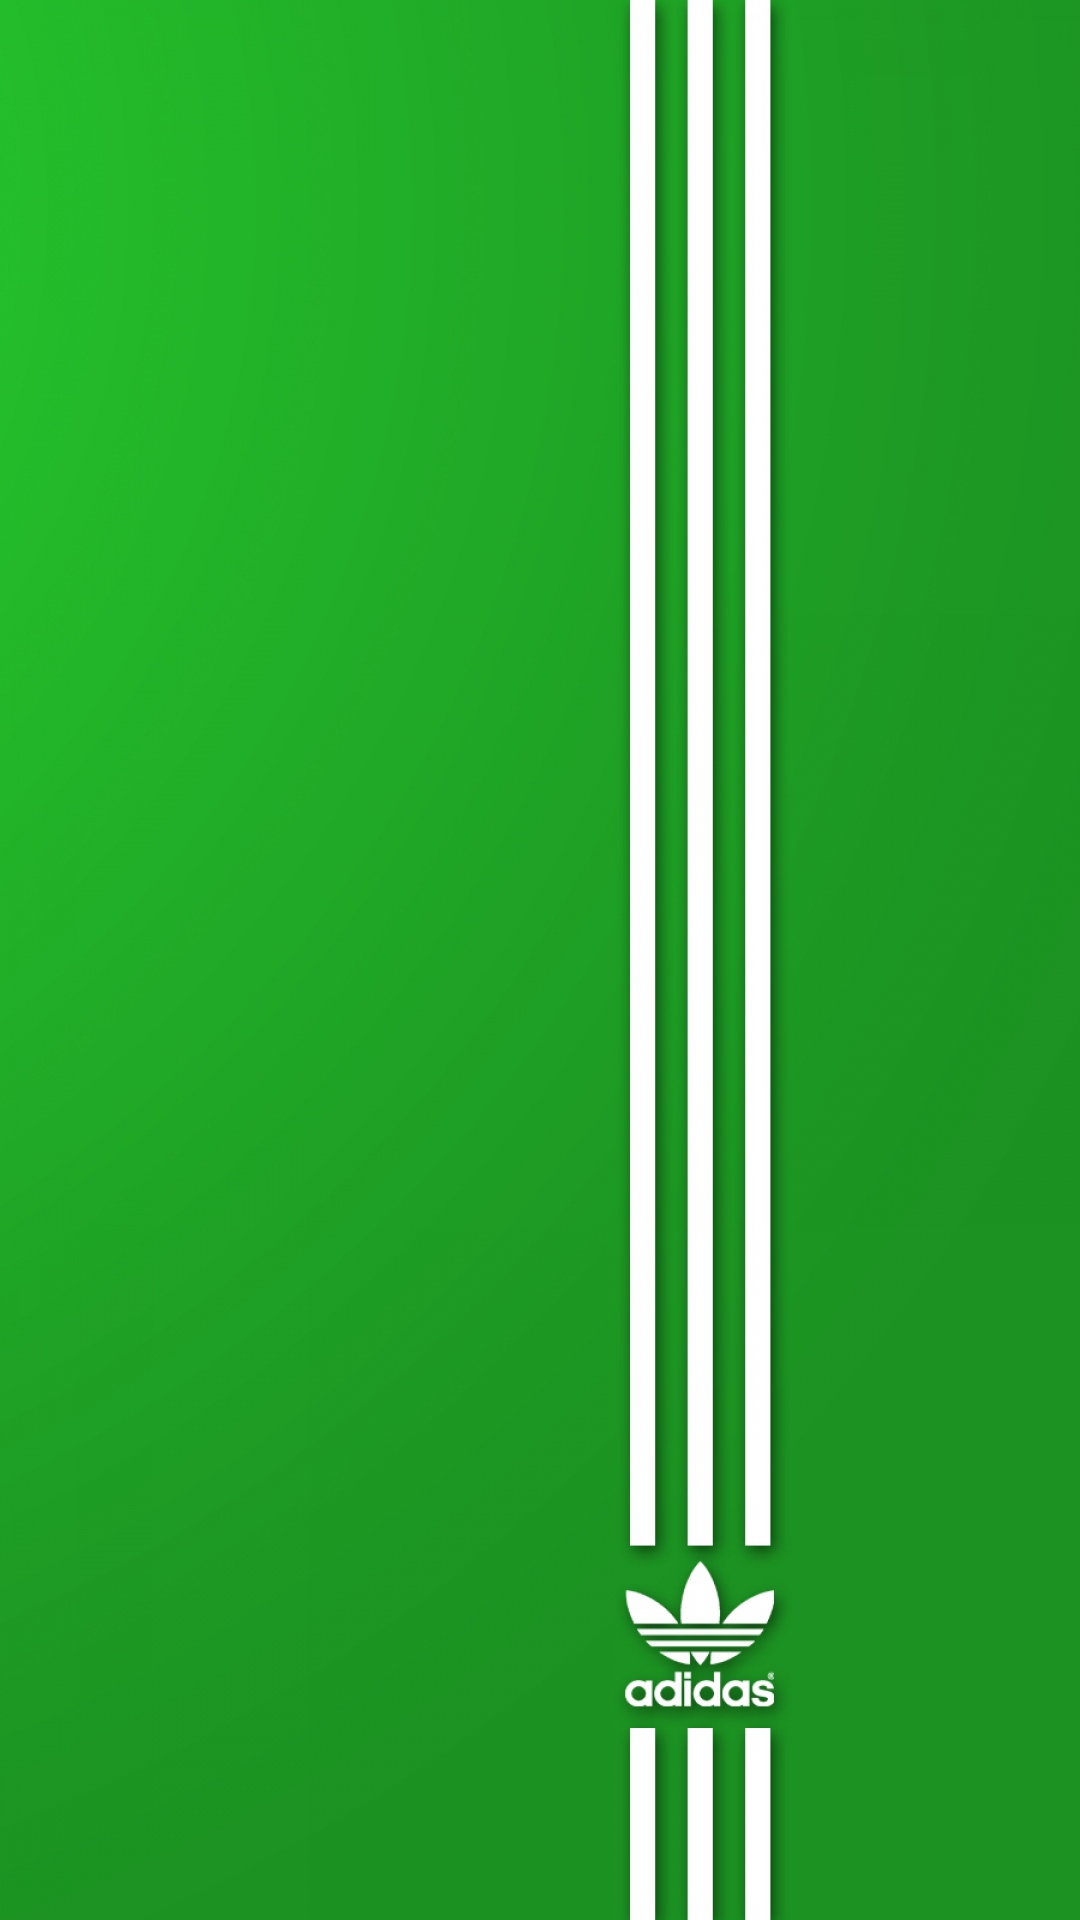 Green Adidas Iphone Wallpaper Adidas Originals 1080x19 Wallpaper Teahub Io